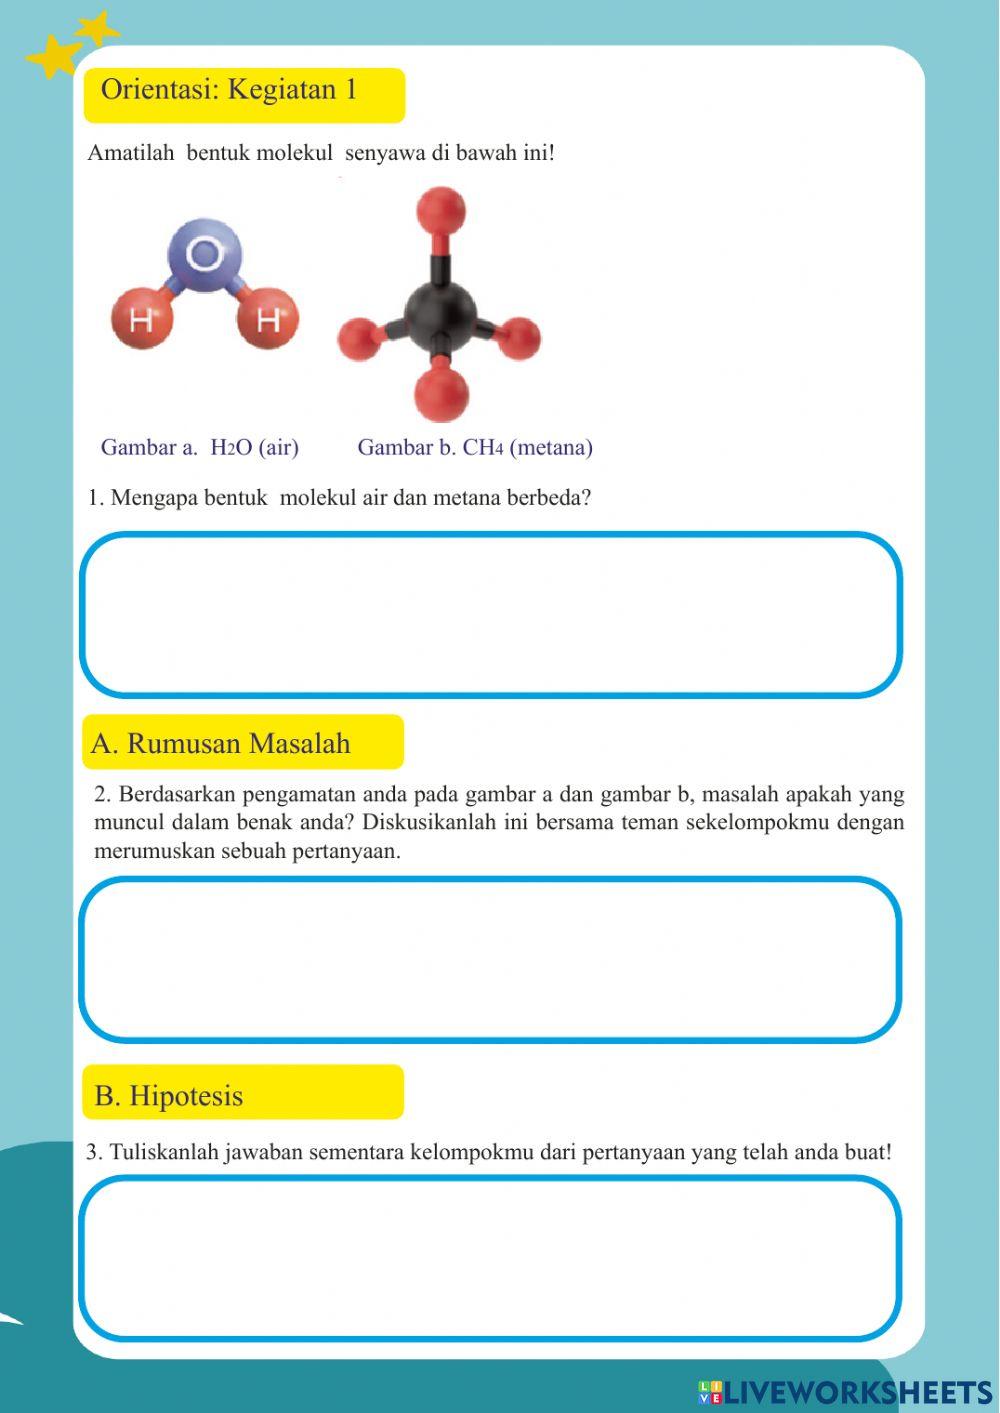 Bentuk molekul